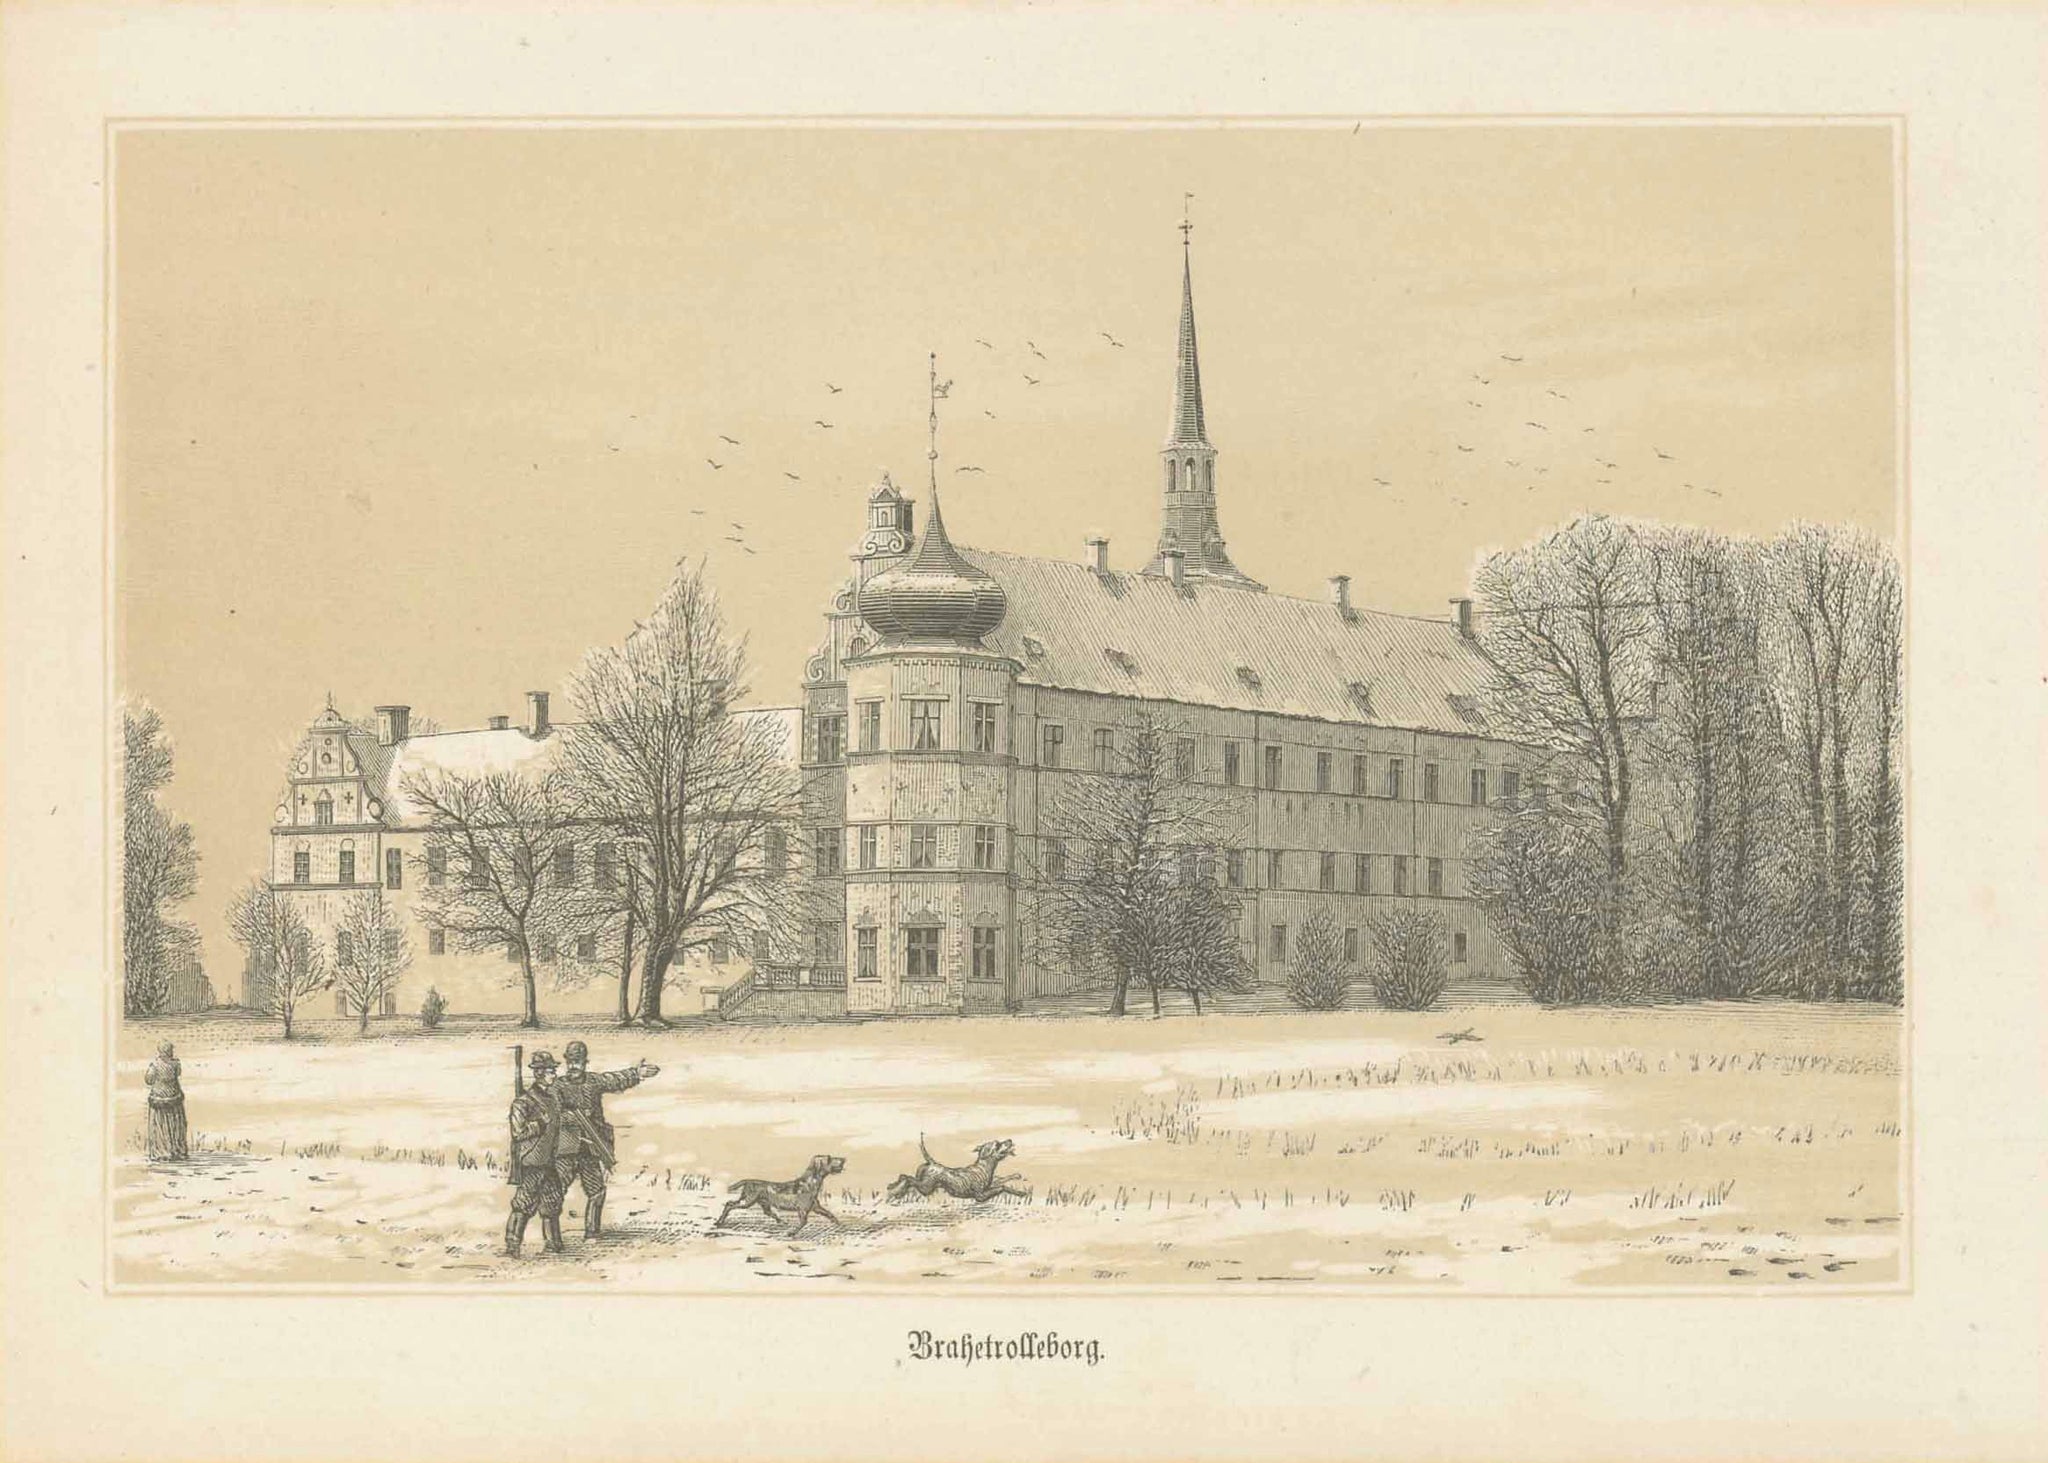 "Brahetrolleborg"  Historic House in Denmark  Anonymous toned lithograph. Copenhagen, 1873  Original antique print  